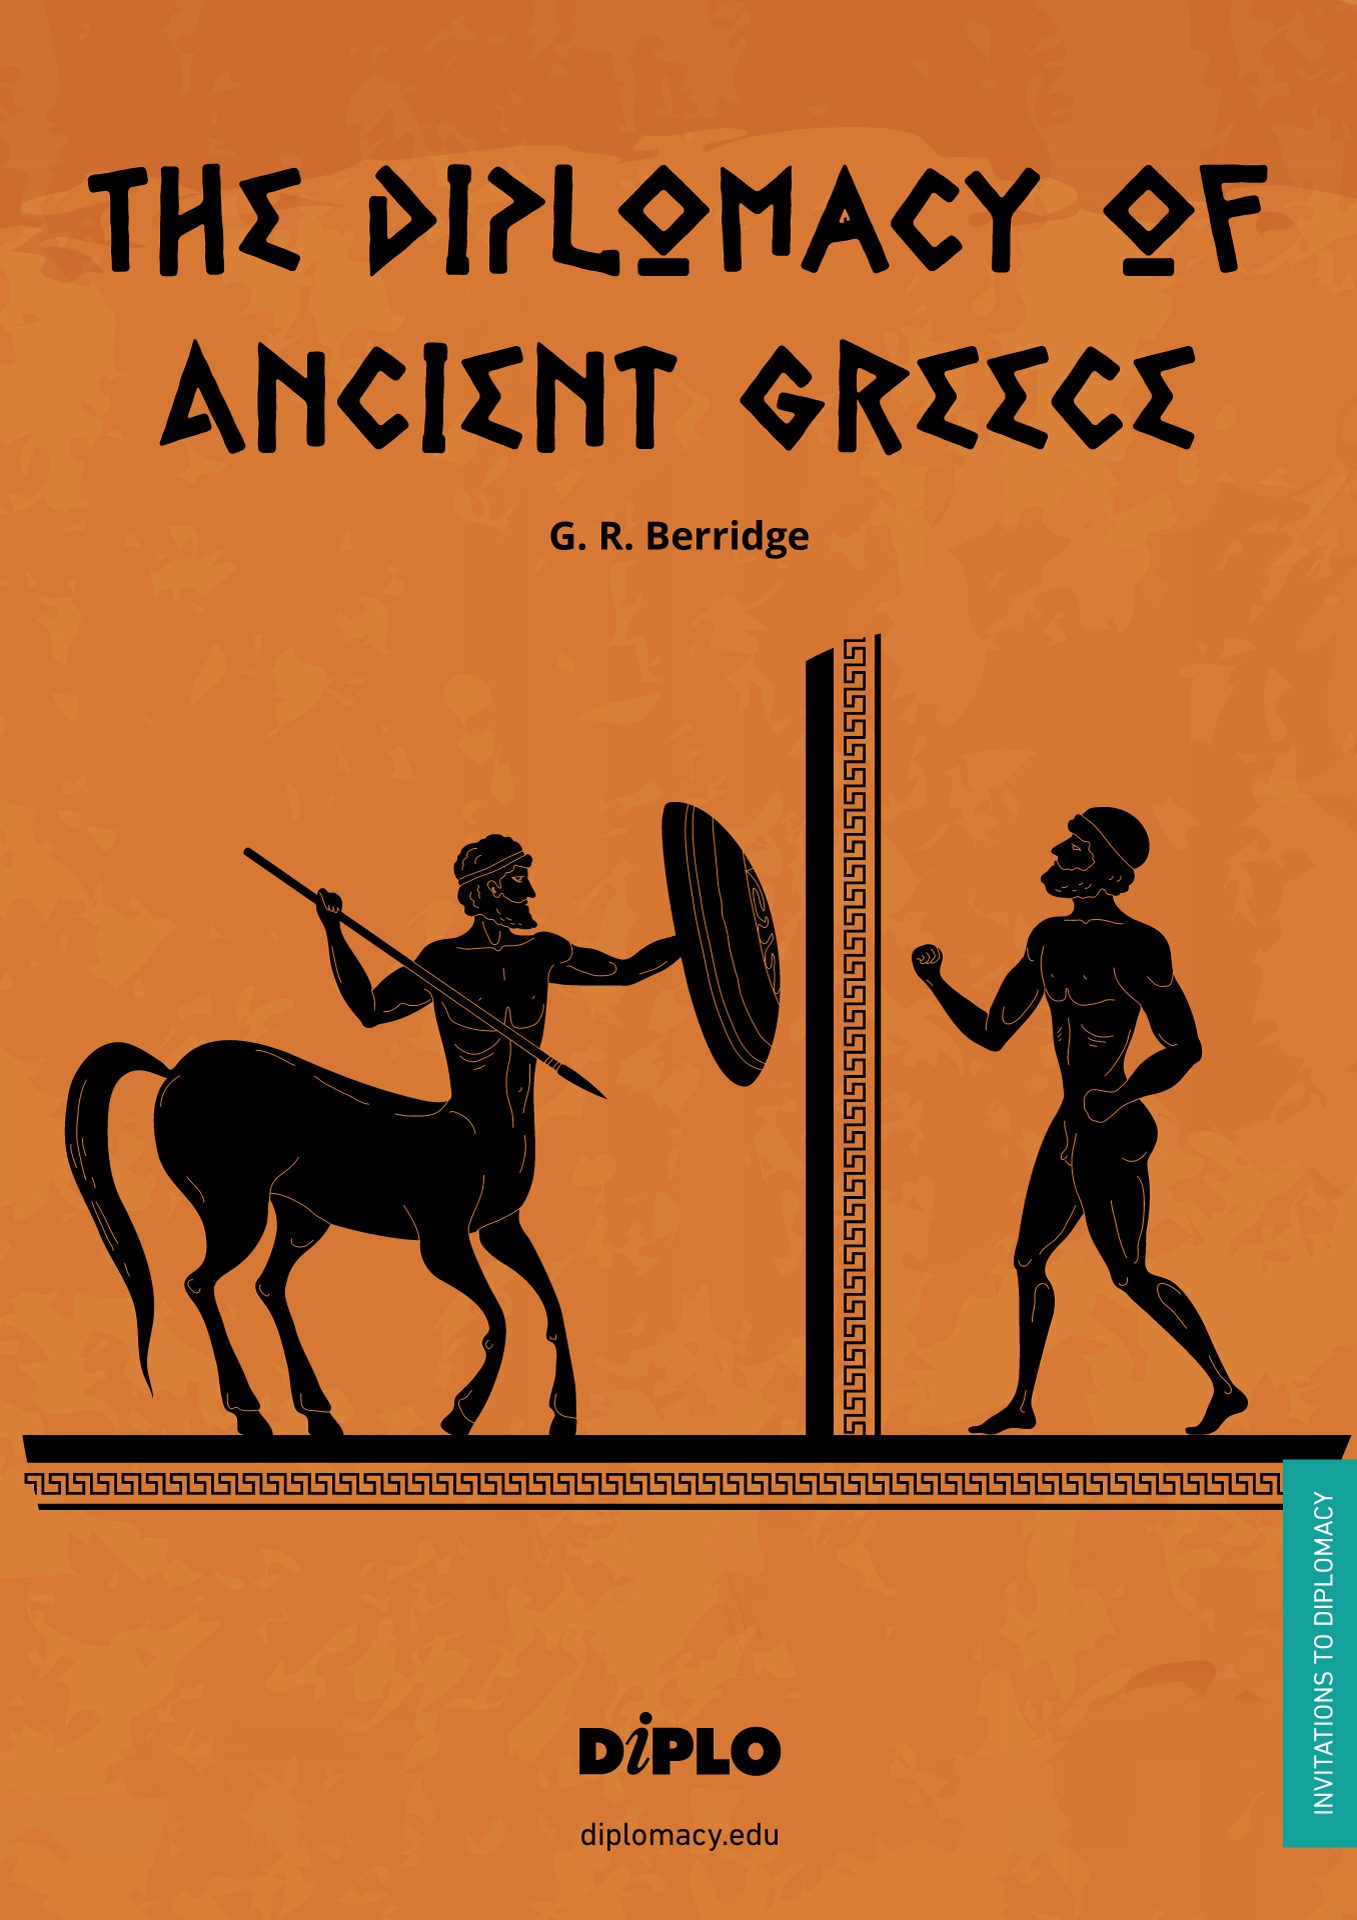 Diplo publication Diplomacy and Ancient Greece G.R.Berridge FINAL